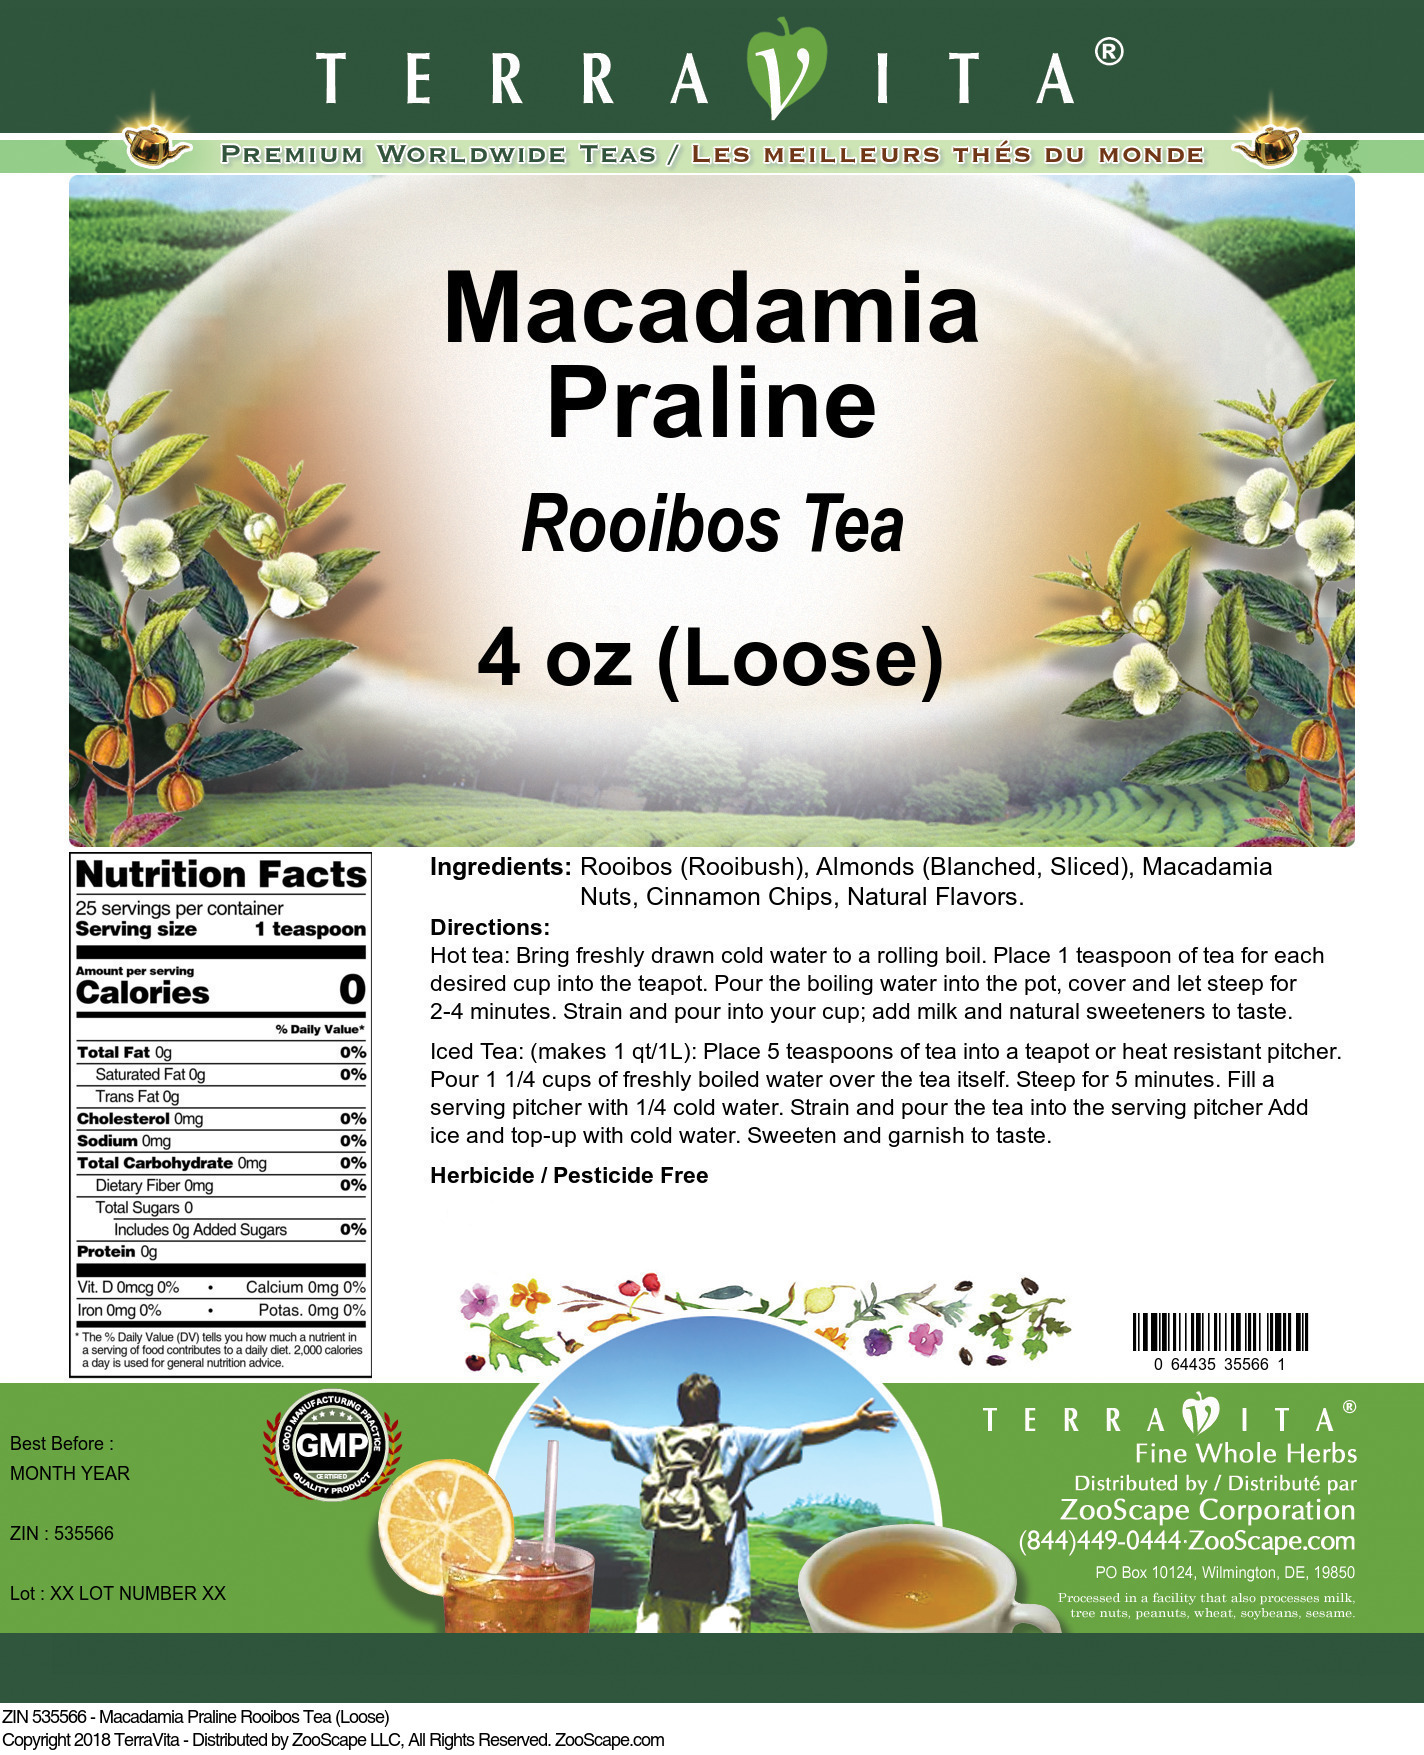 Macadamia Praline Rooibos Tea (Loose) - Label